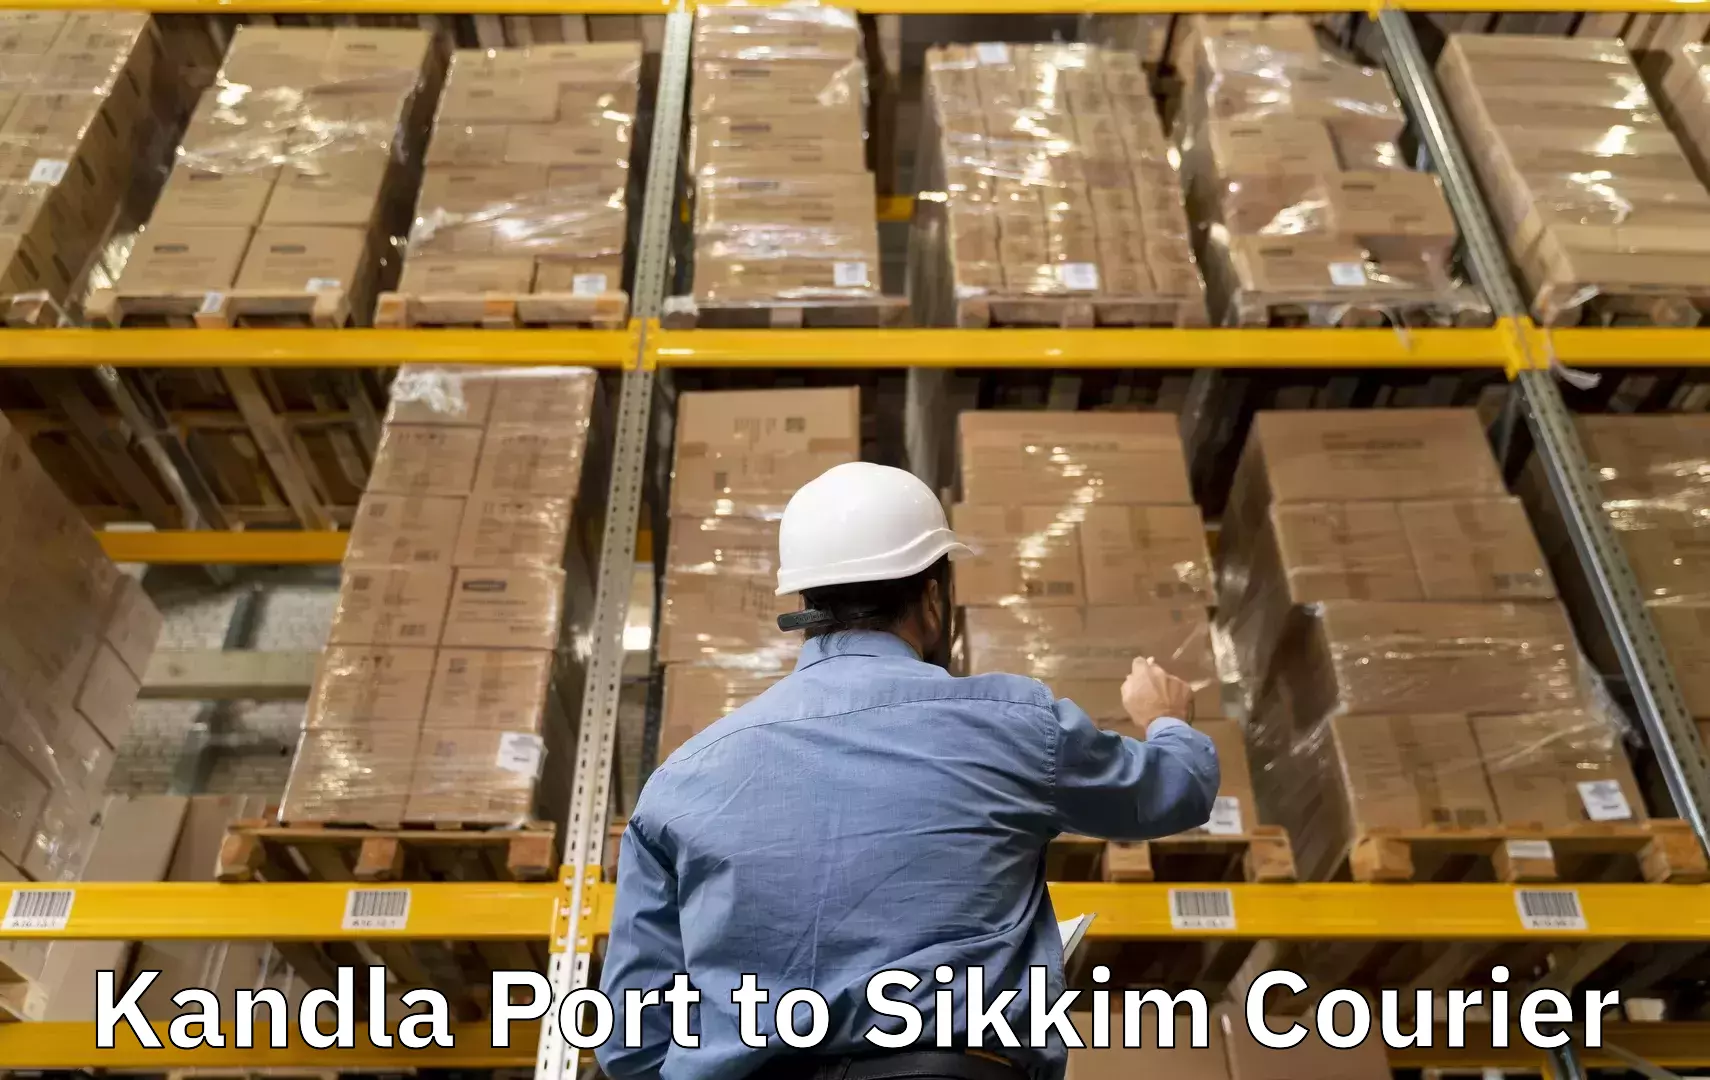 Baggage transport professionals Kandla Port to North Sikkim